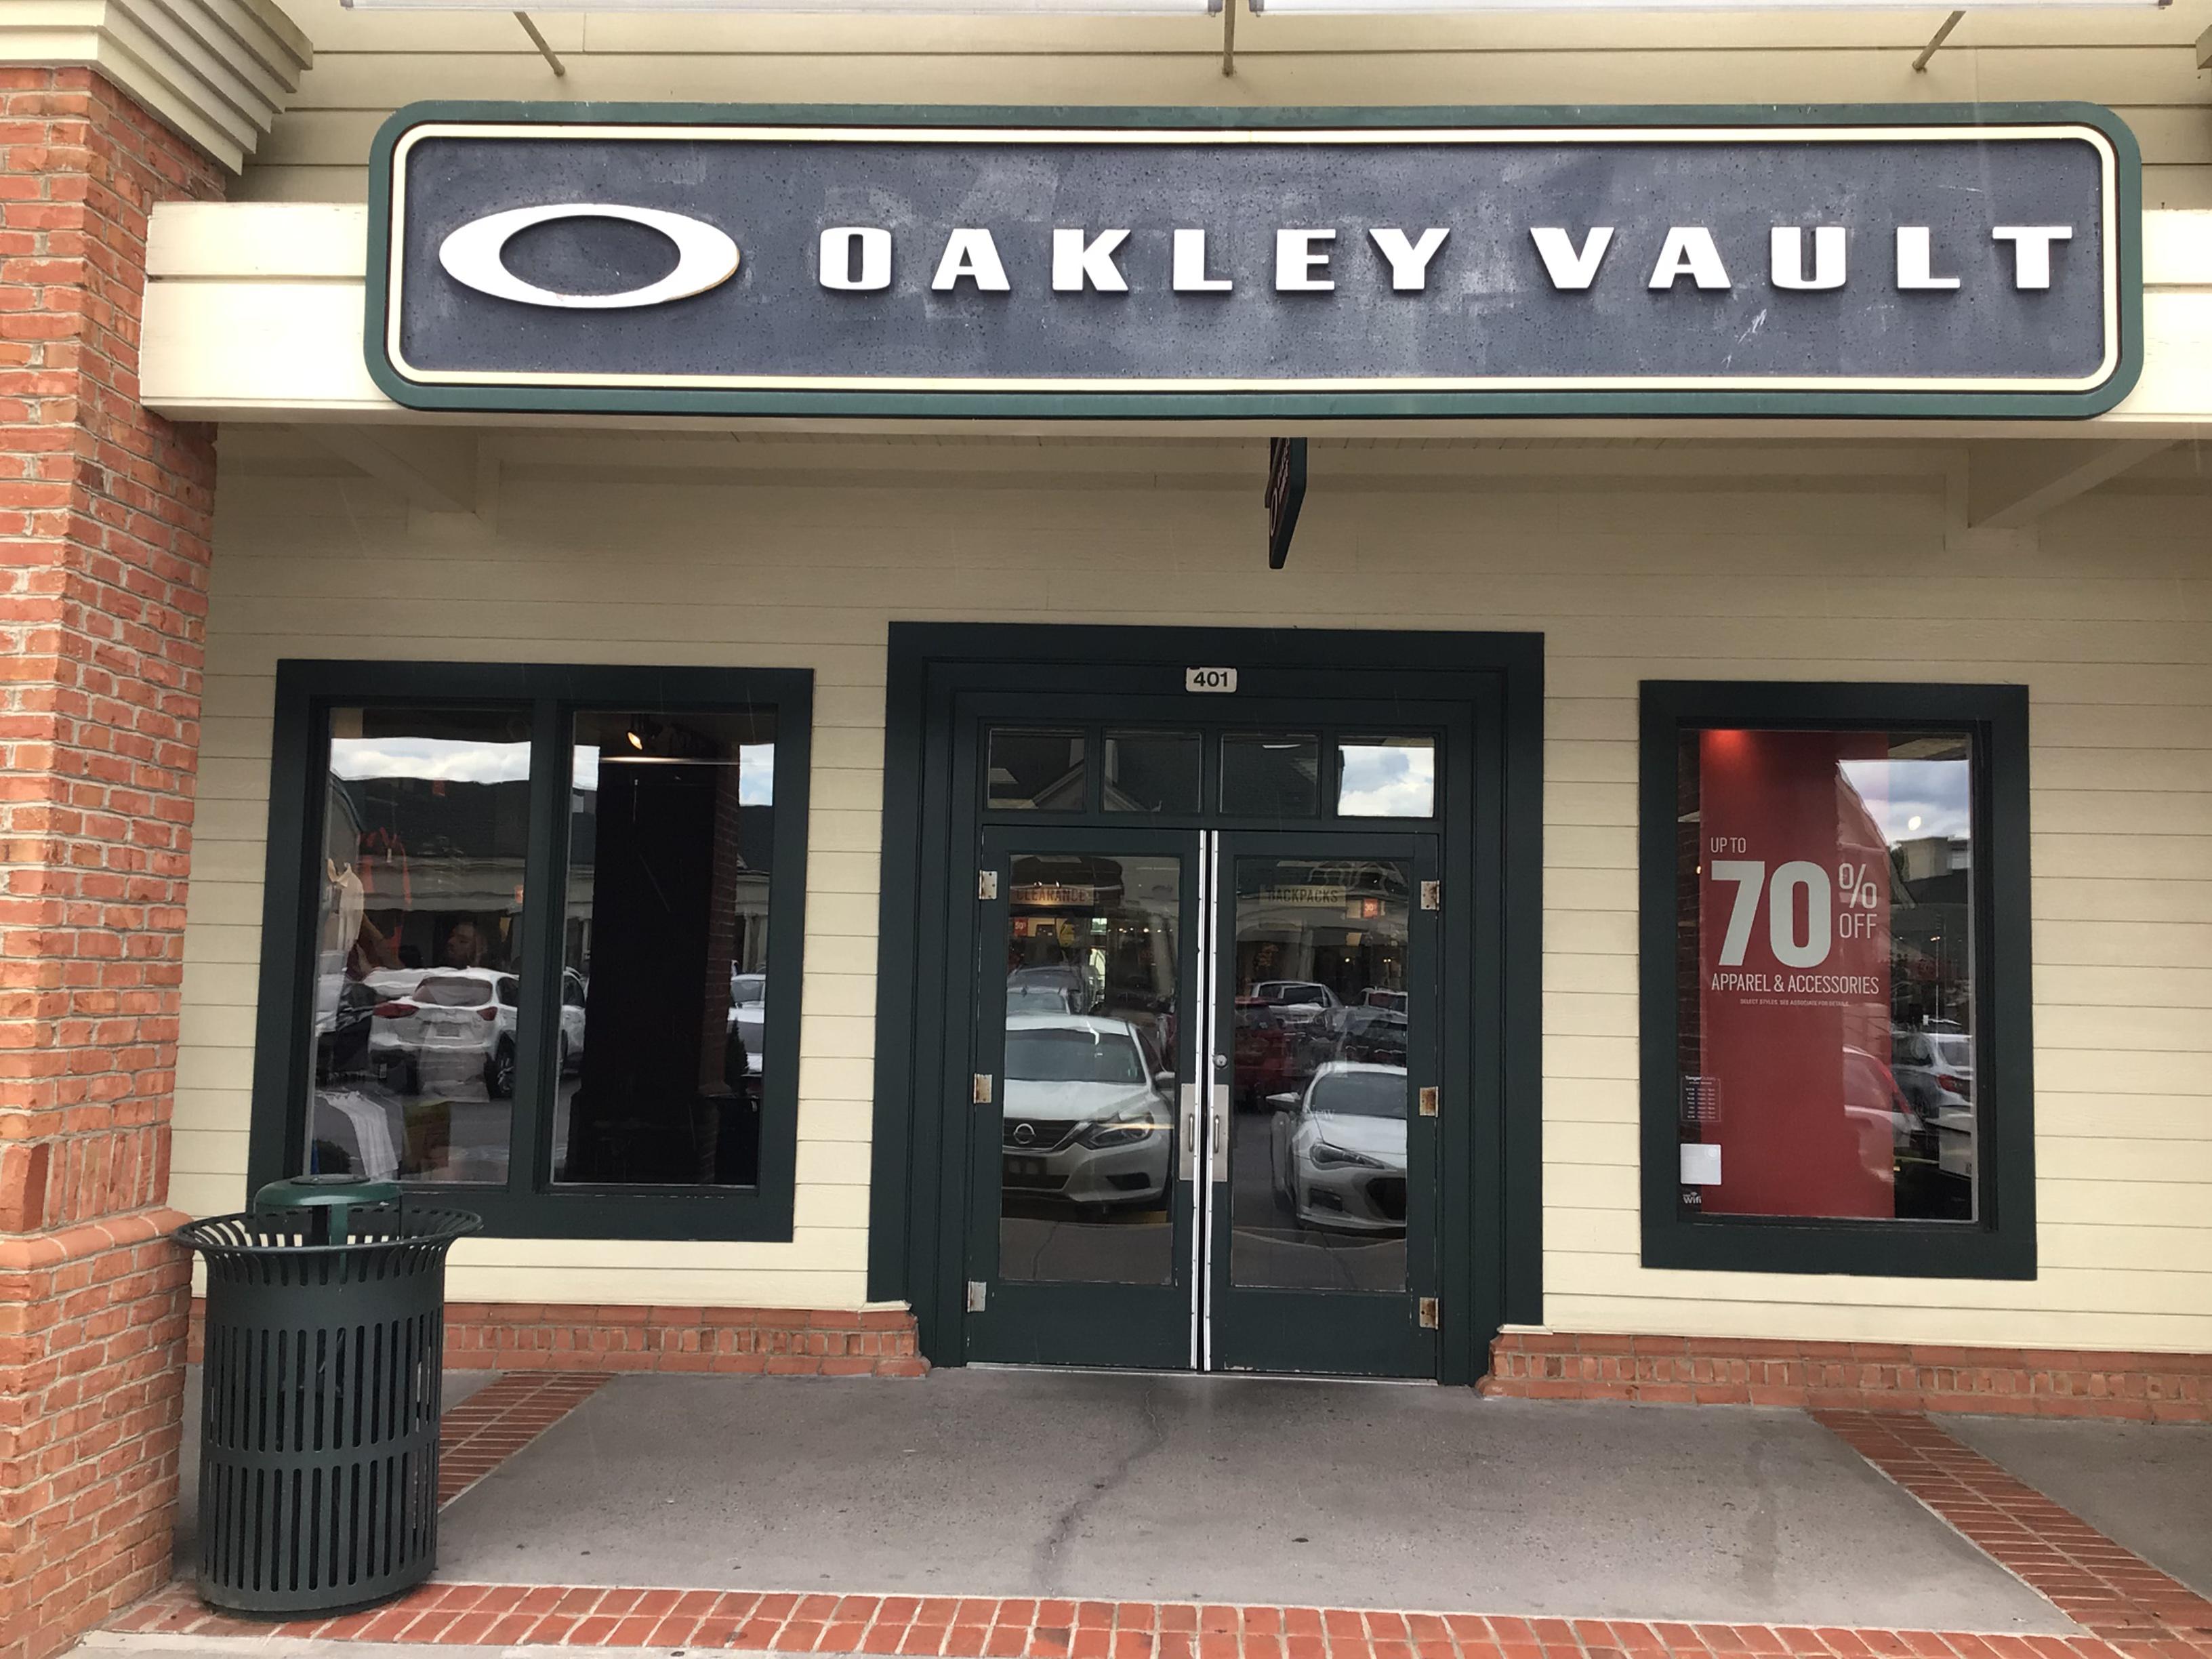 Oakley Vault - Sevierville, TN 37862